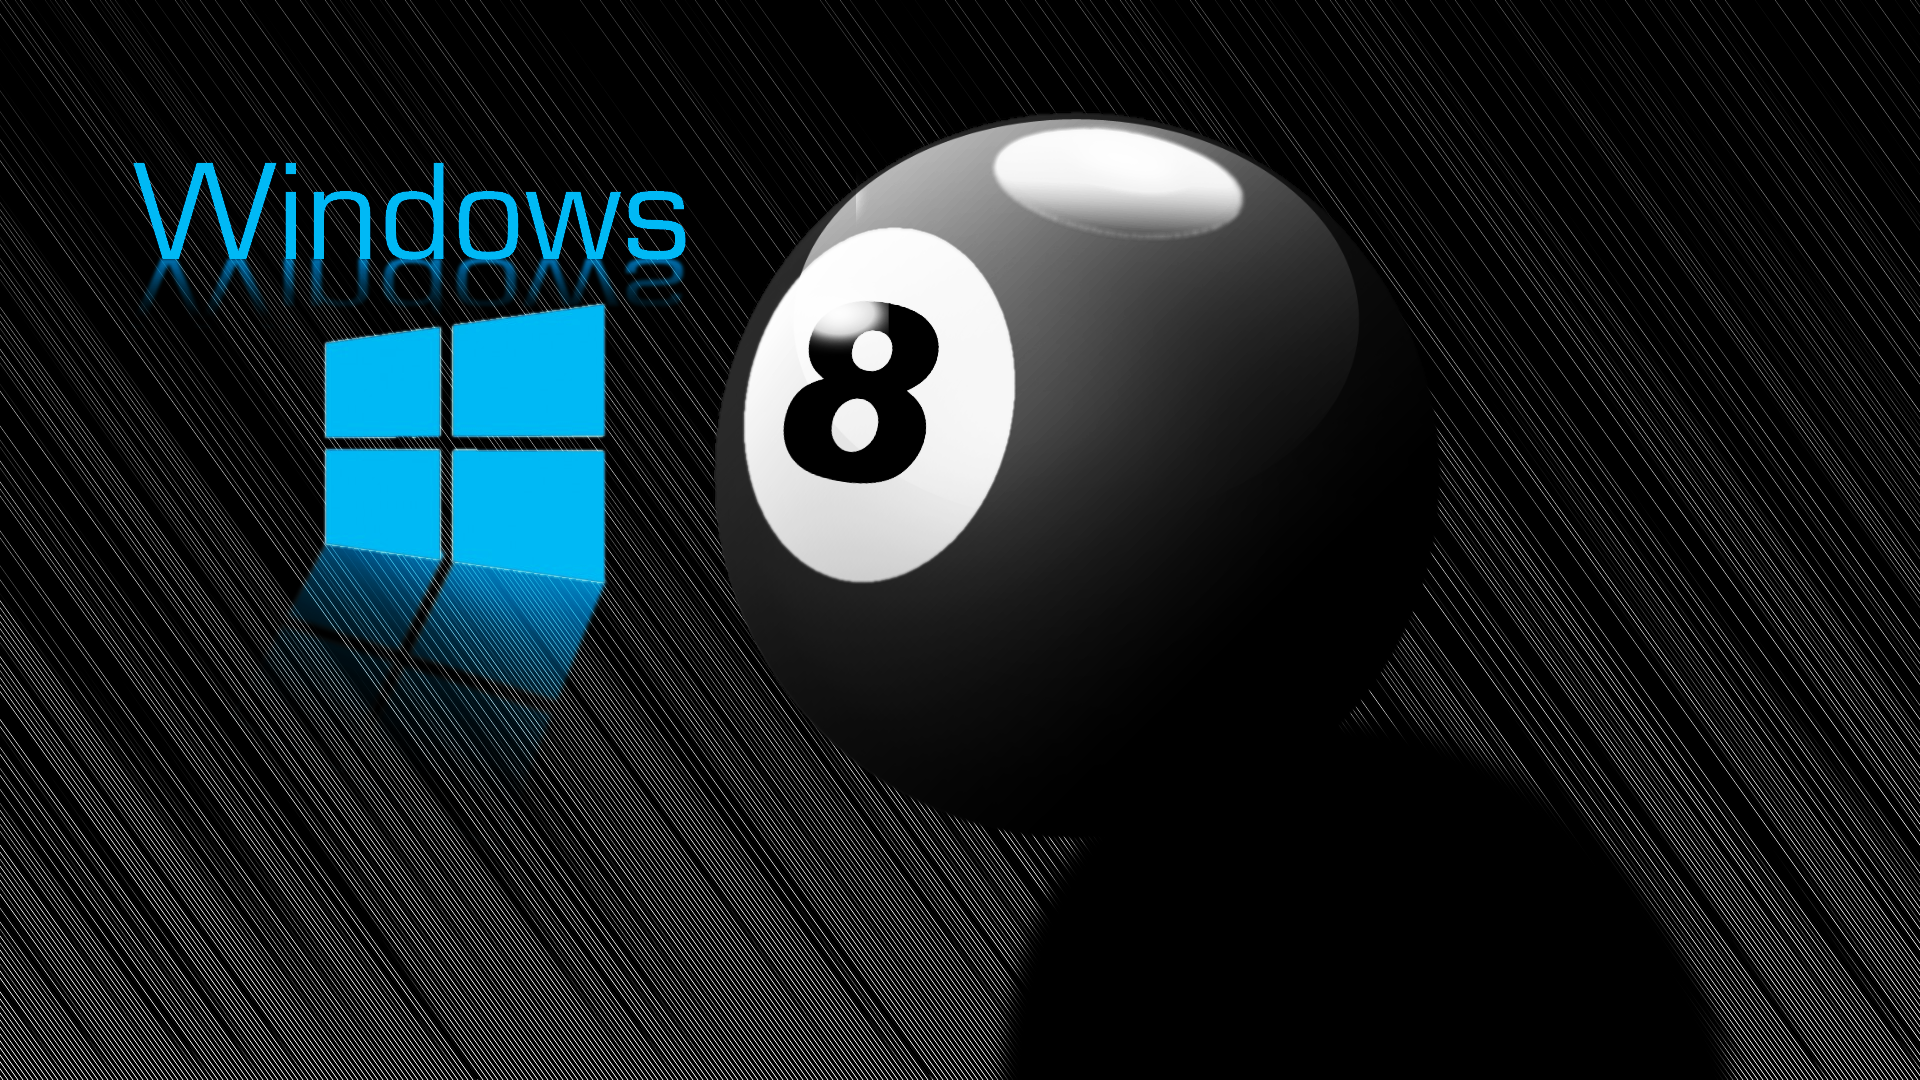 Windows 8 HD Wallpaper | Background Image | 1920x1080